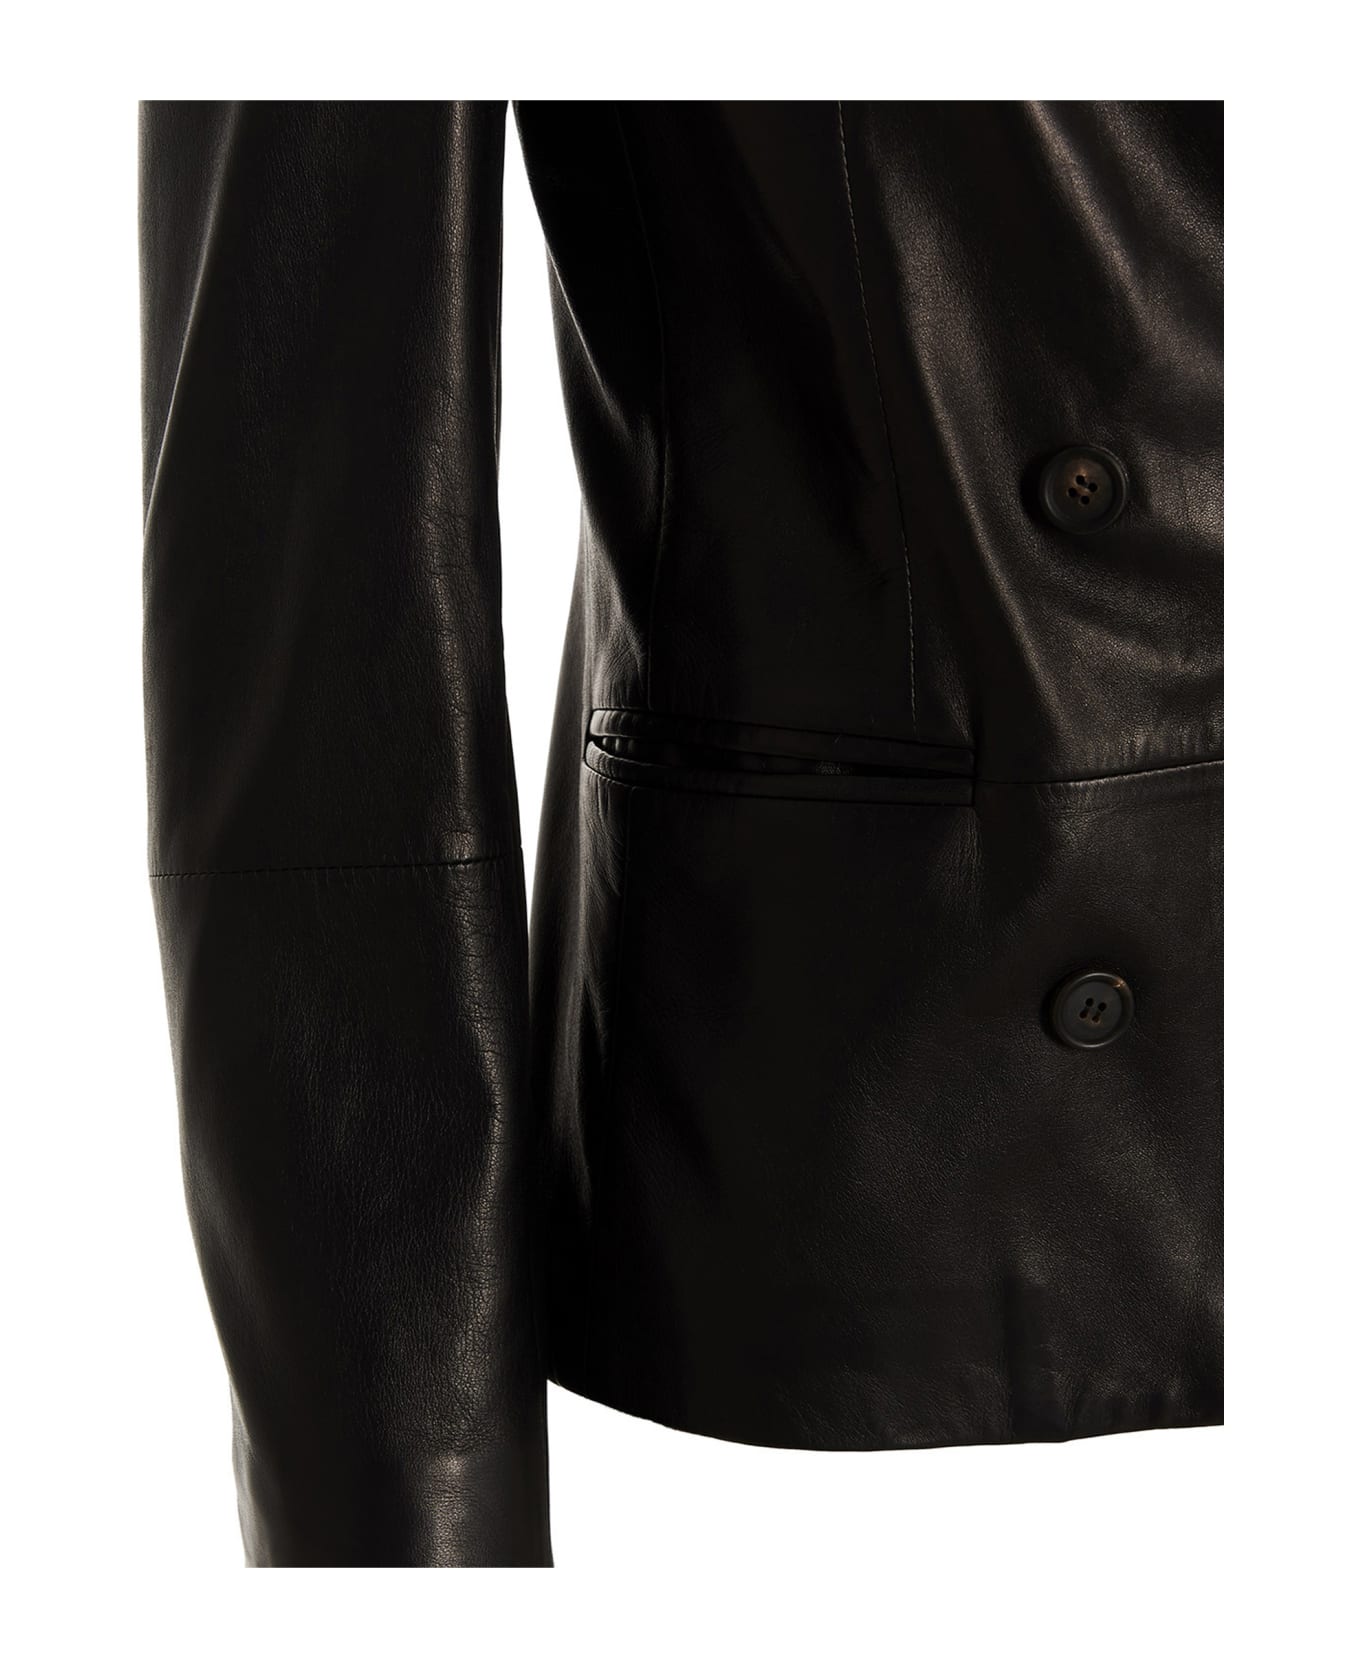 Brunello Cucinelli Double-breasted Leather Blazer Jacket - Black  